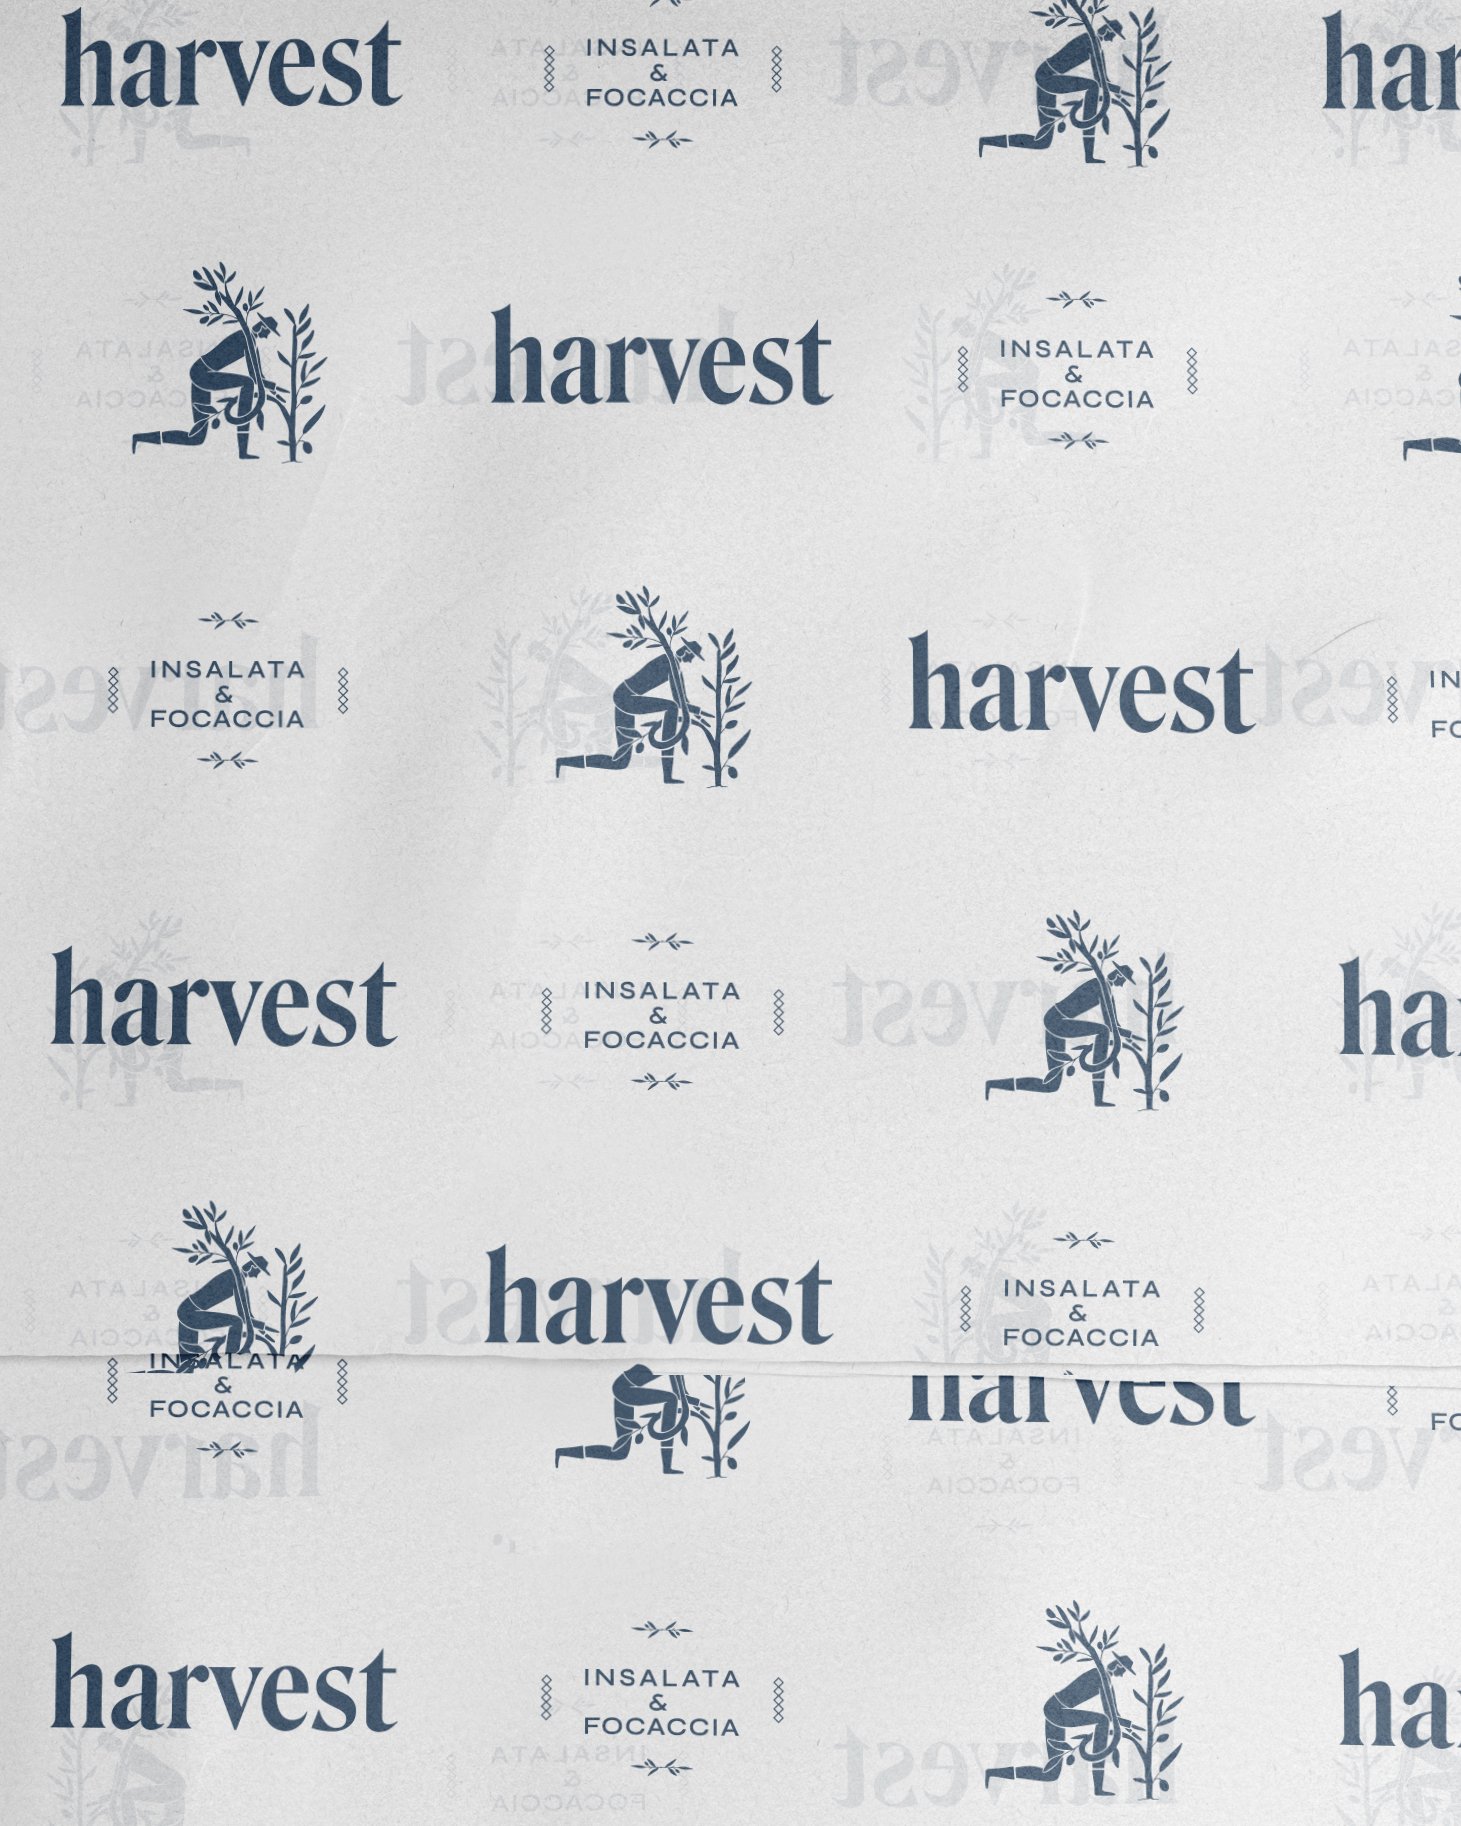 Harvest_Papel 2.jpg